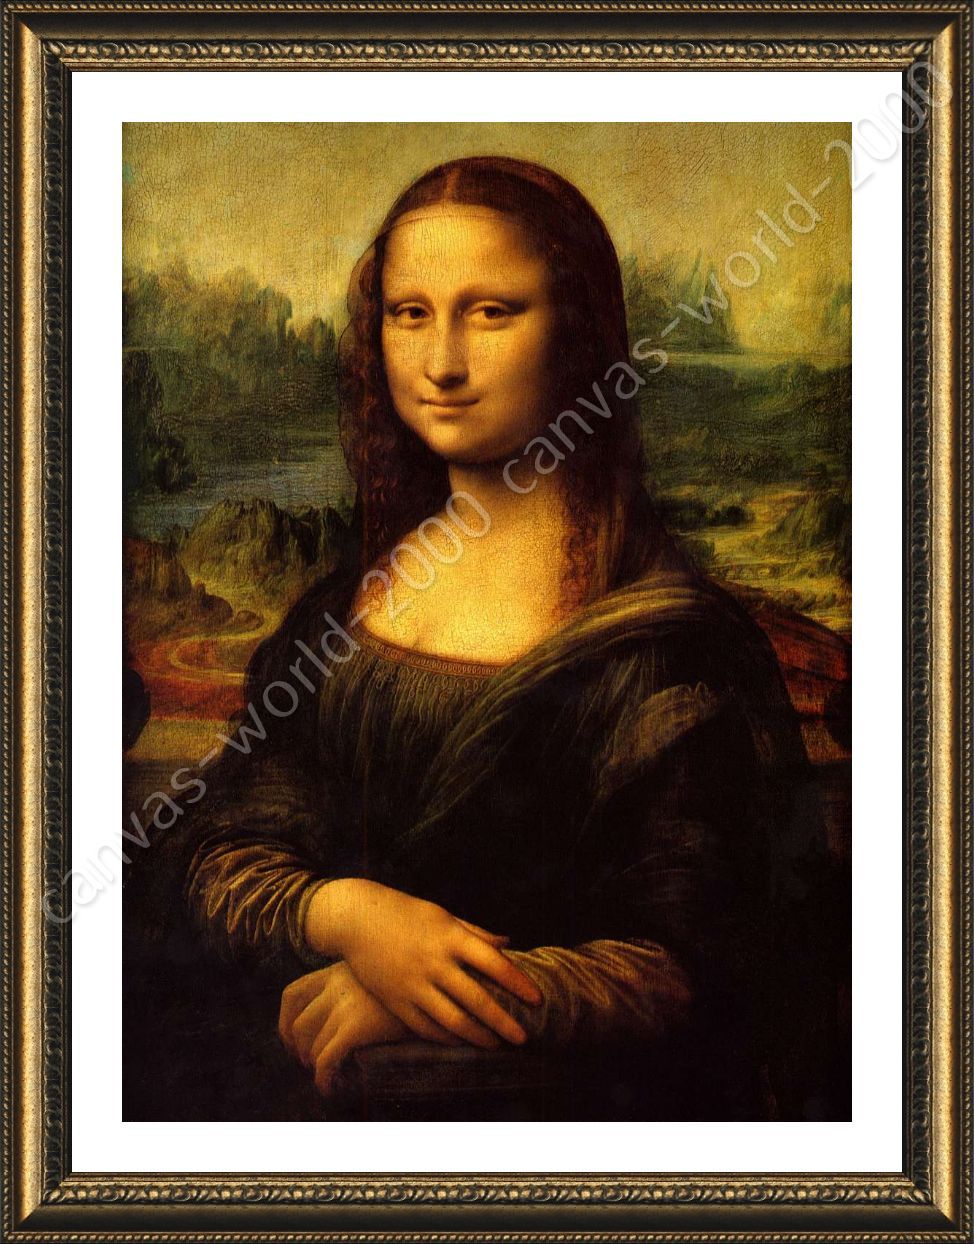 Mona Lisa reproduction oil on board 1969 after Da Vinci, Collectables, Gumtree Australia Bayswater Area - Noranda